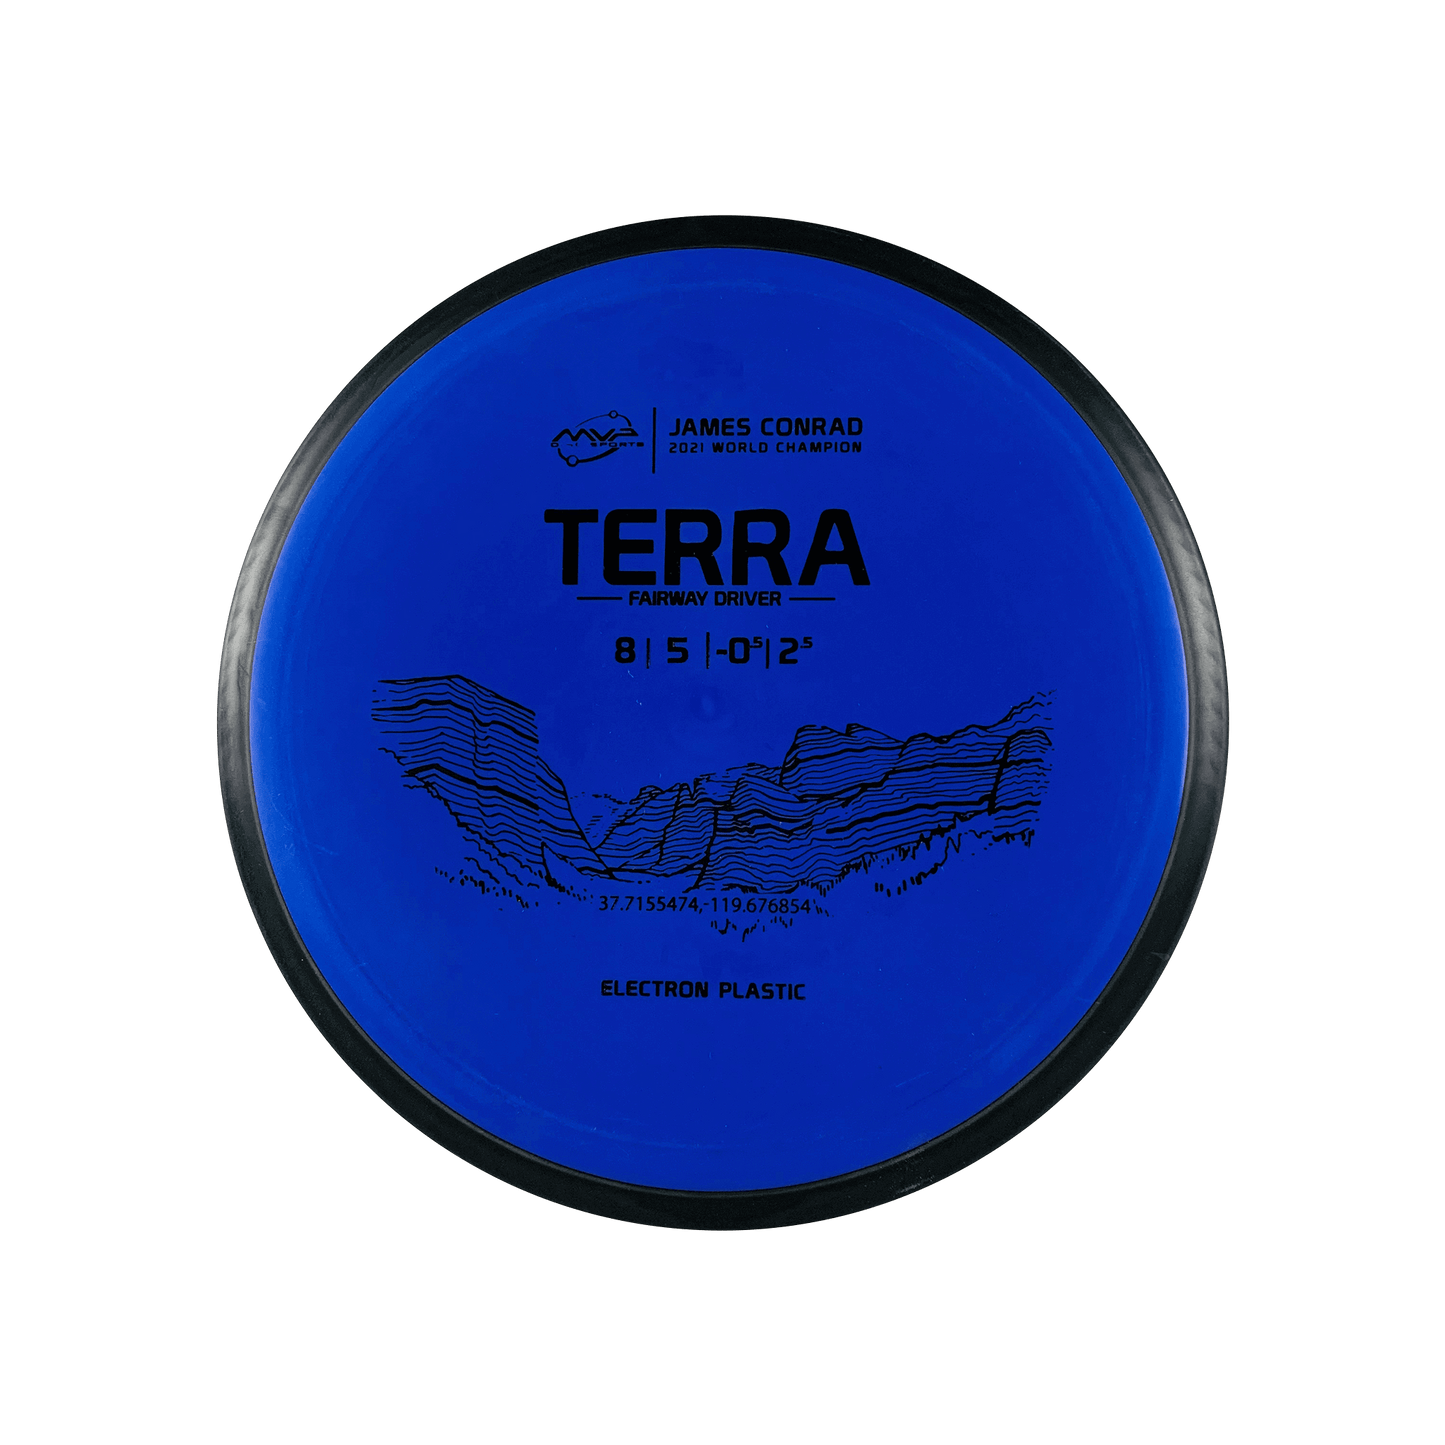 Electron Terra - James Conrad 2021 World Champion Disc MVP blurple 173 